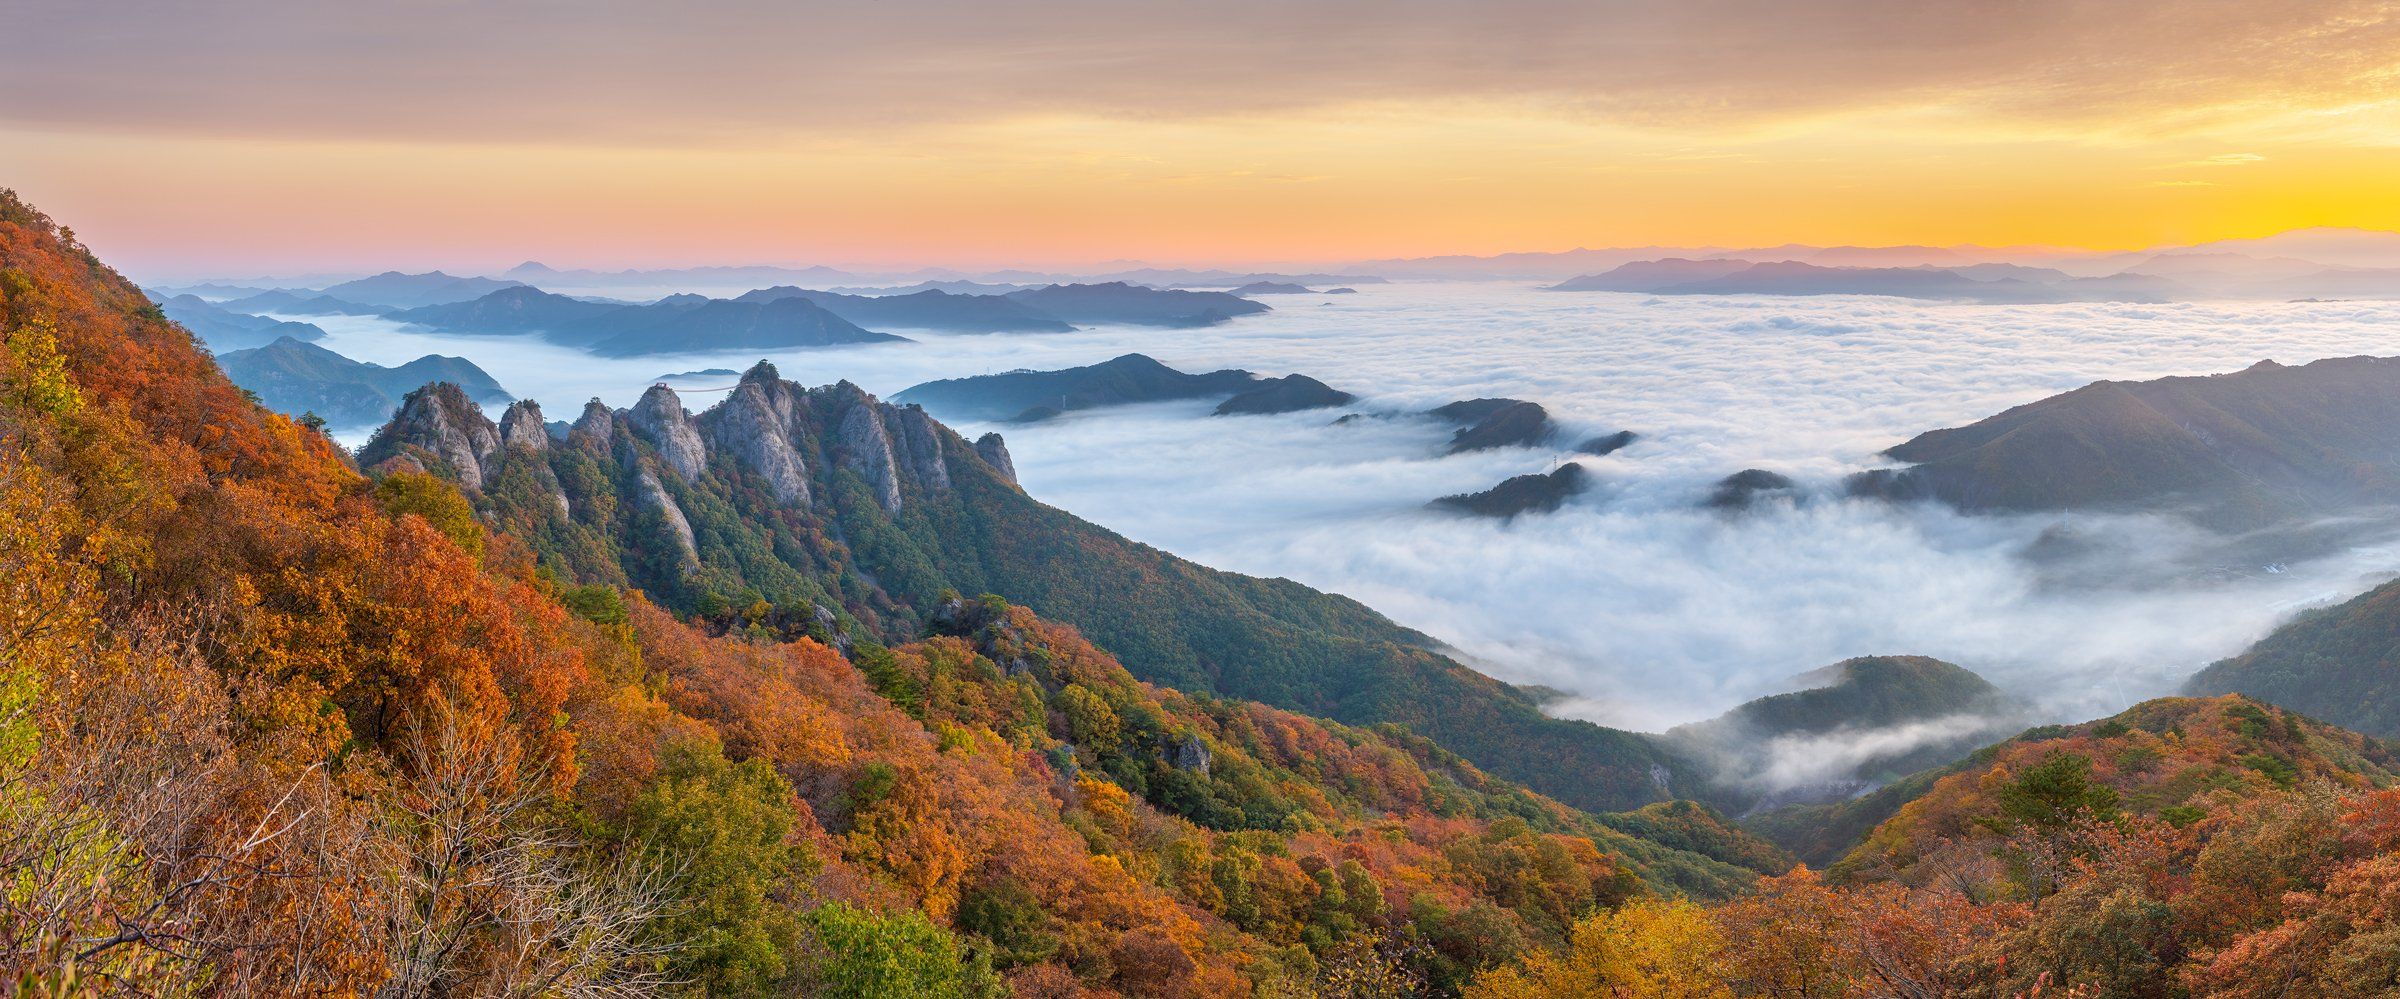 sea of clouds, autumn, clouds, mountain, korea, rock formation, sunrise, Jaeyoun Ryu